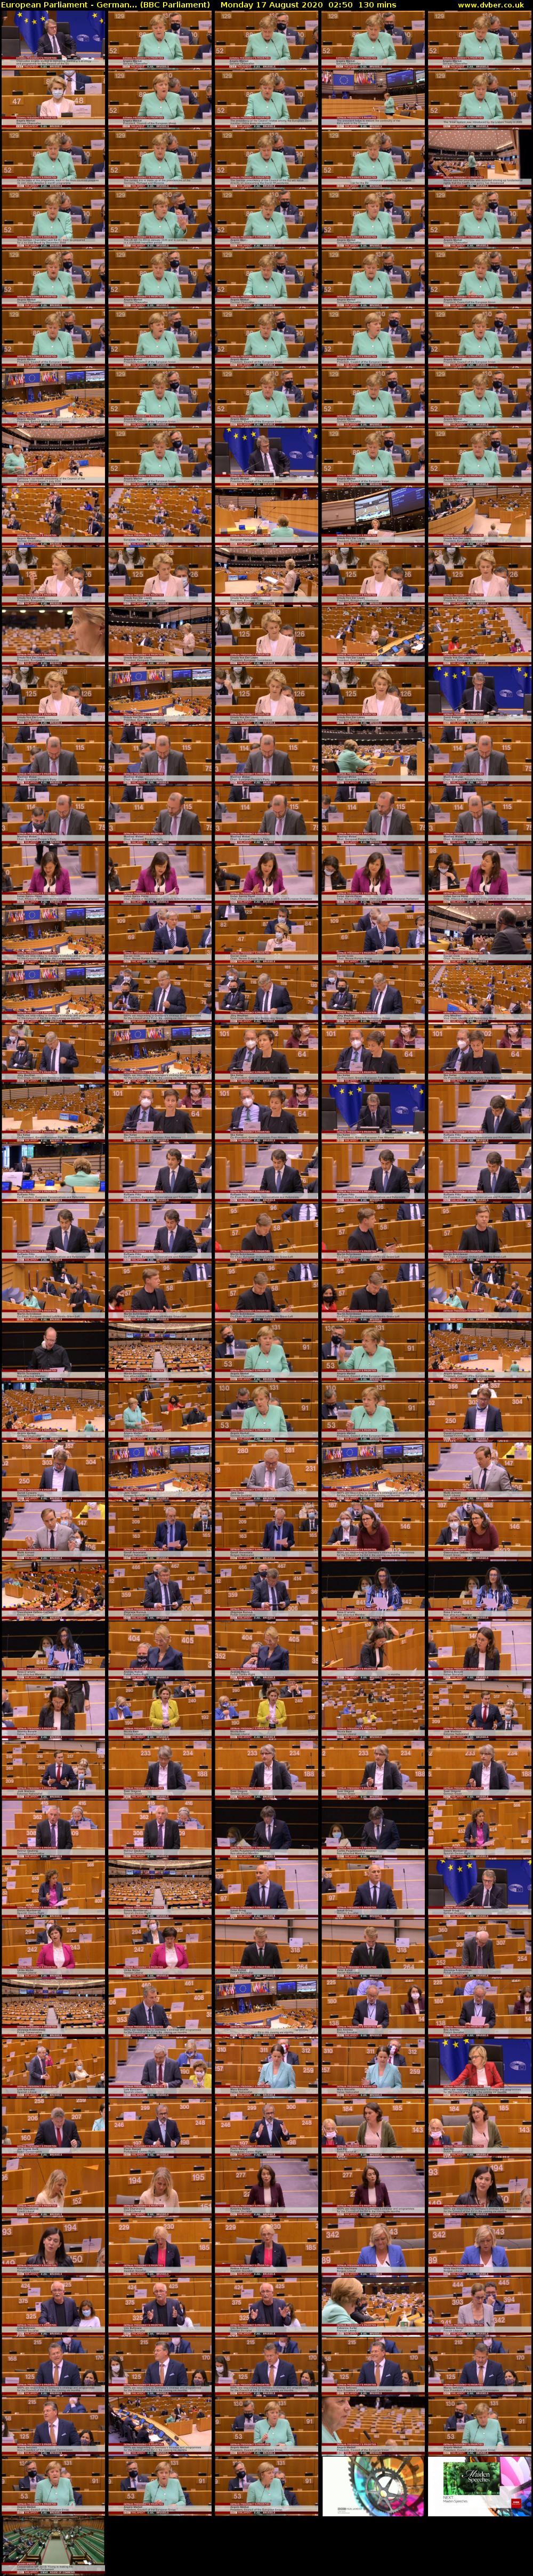 European Parliament - German... (BBC Parliament) Monday 17 August 2020 02:50 - 05:00